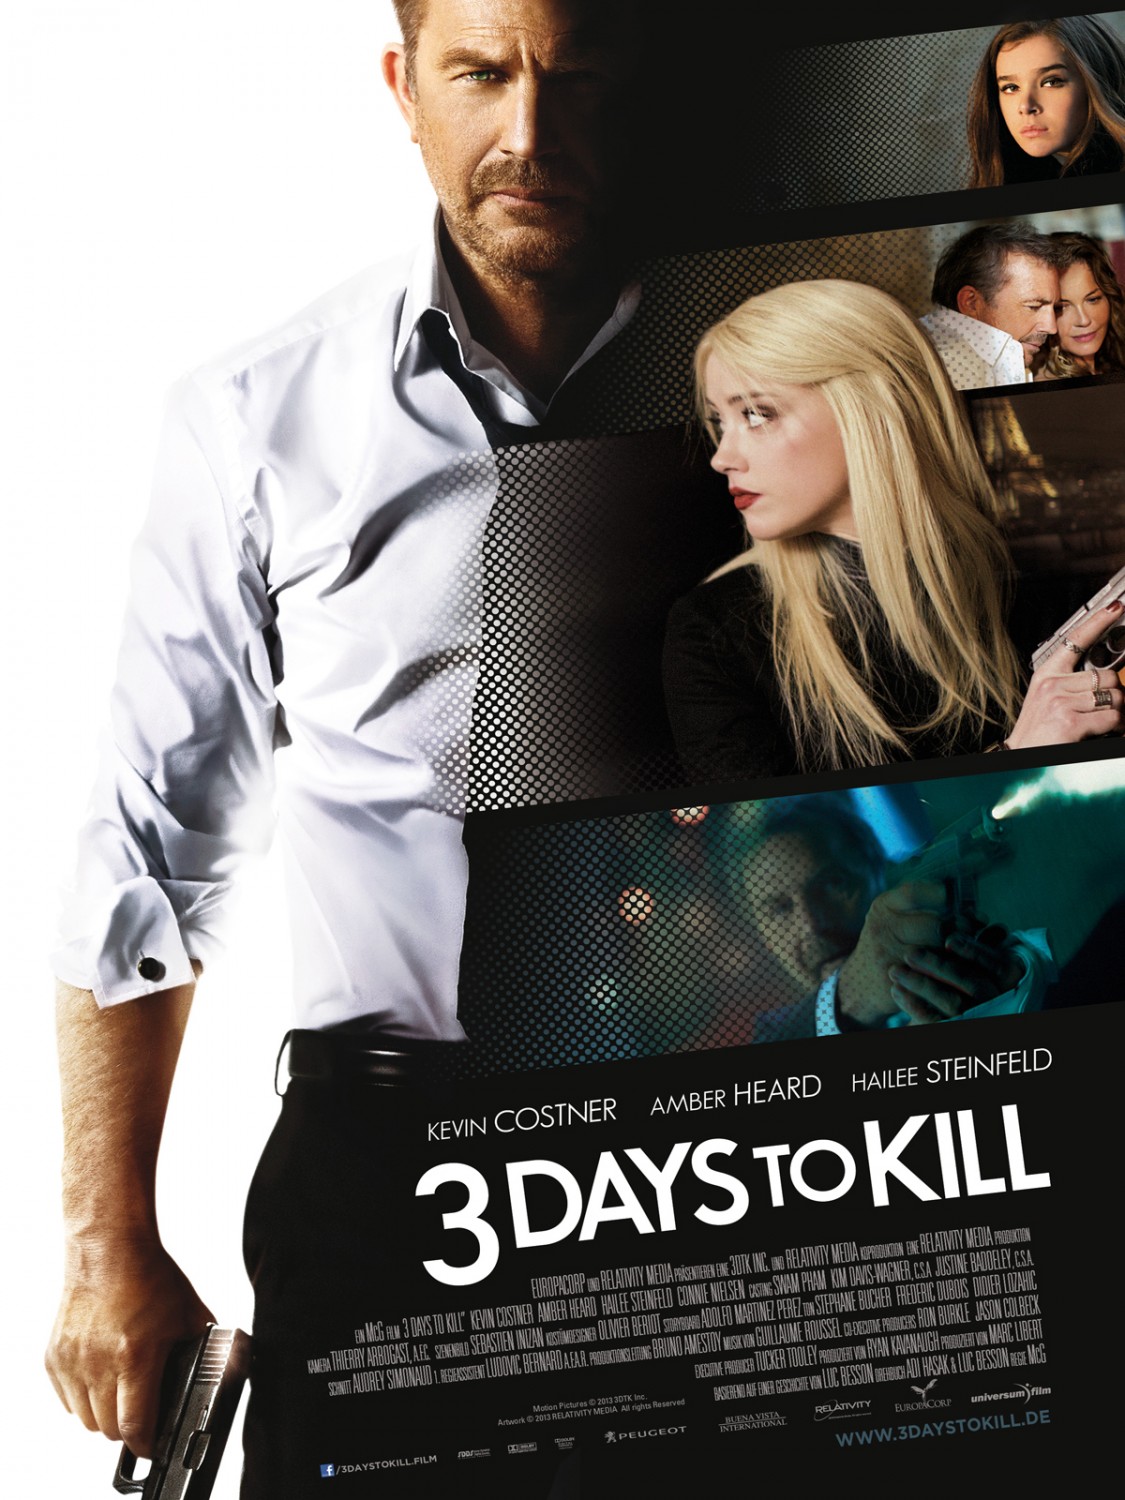 3 Days to Kill (#5 of 8): Extra Large Movie Poster Image - IMP Awards